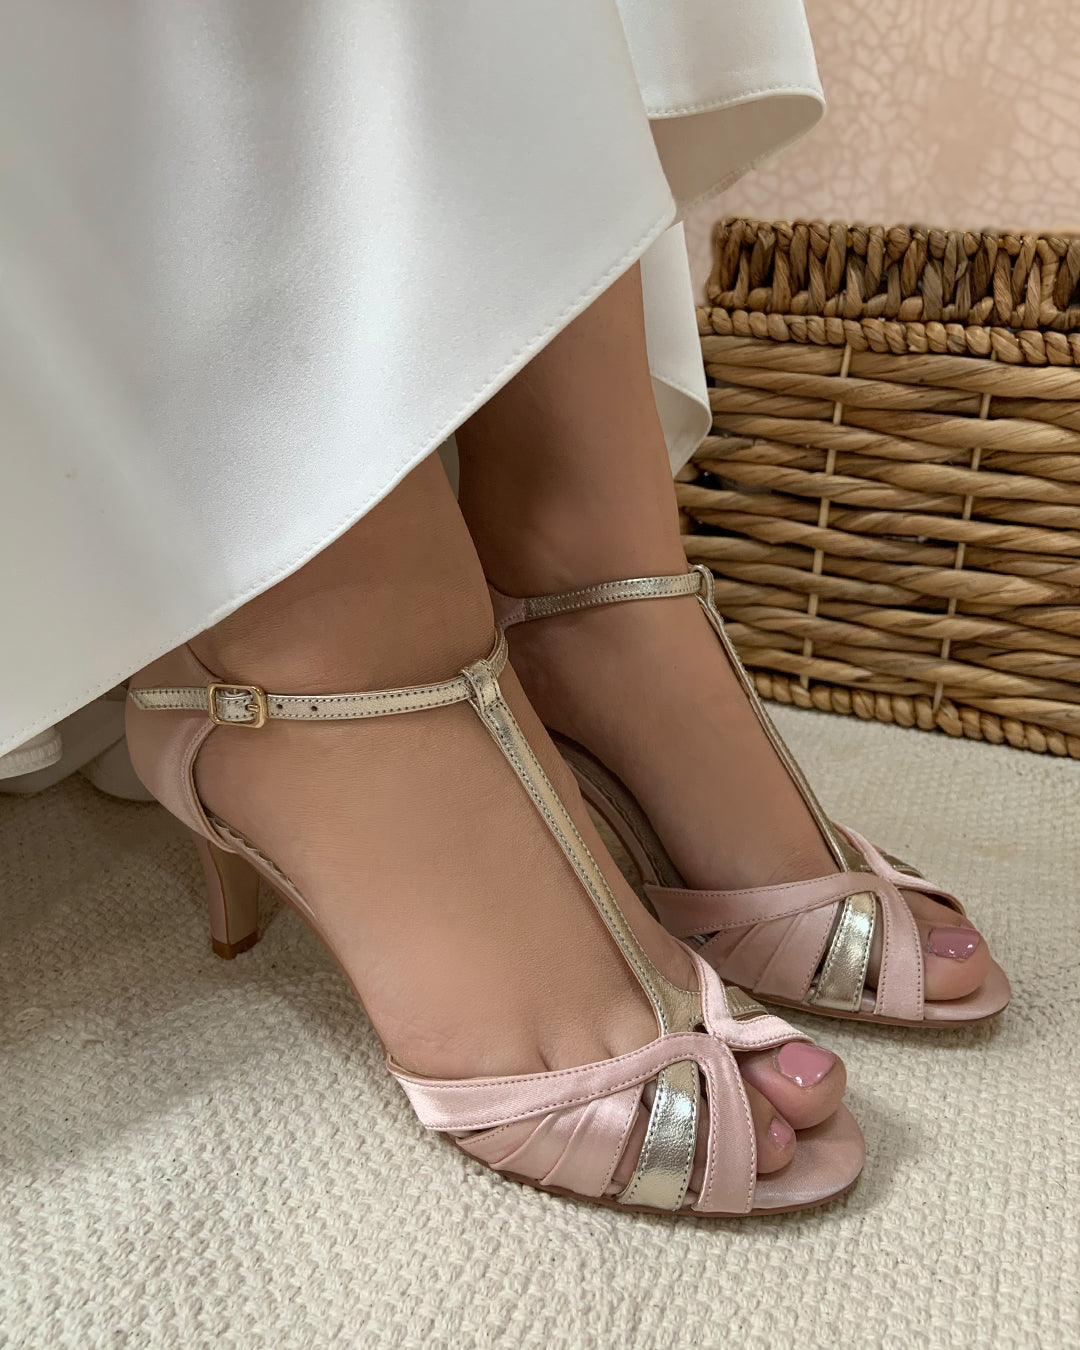 Bronte blush pink vintage style t-bar sandals